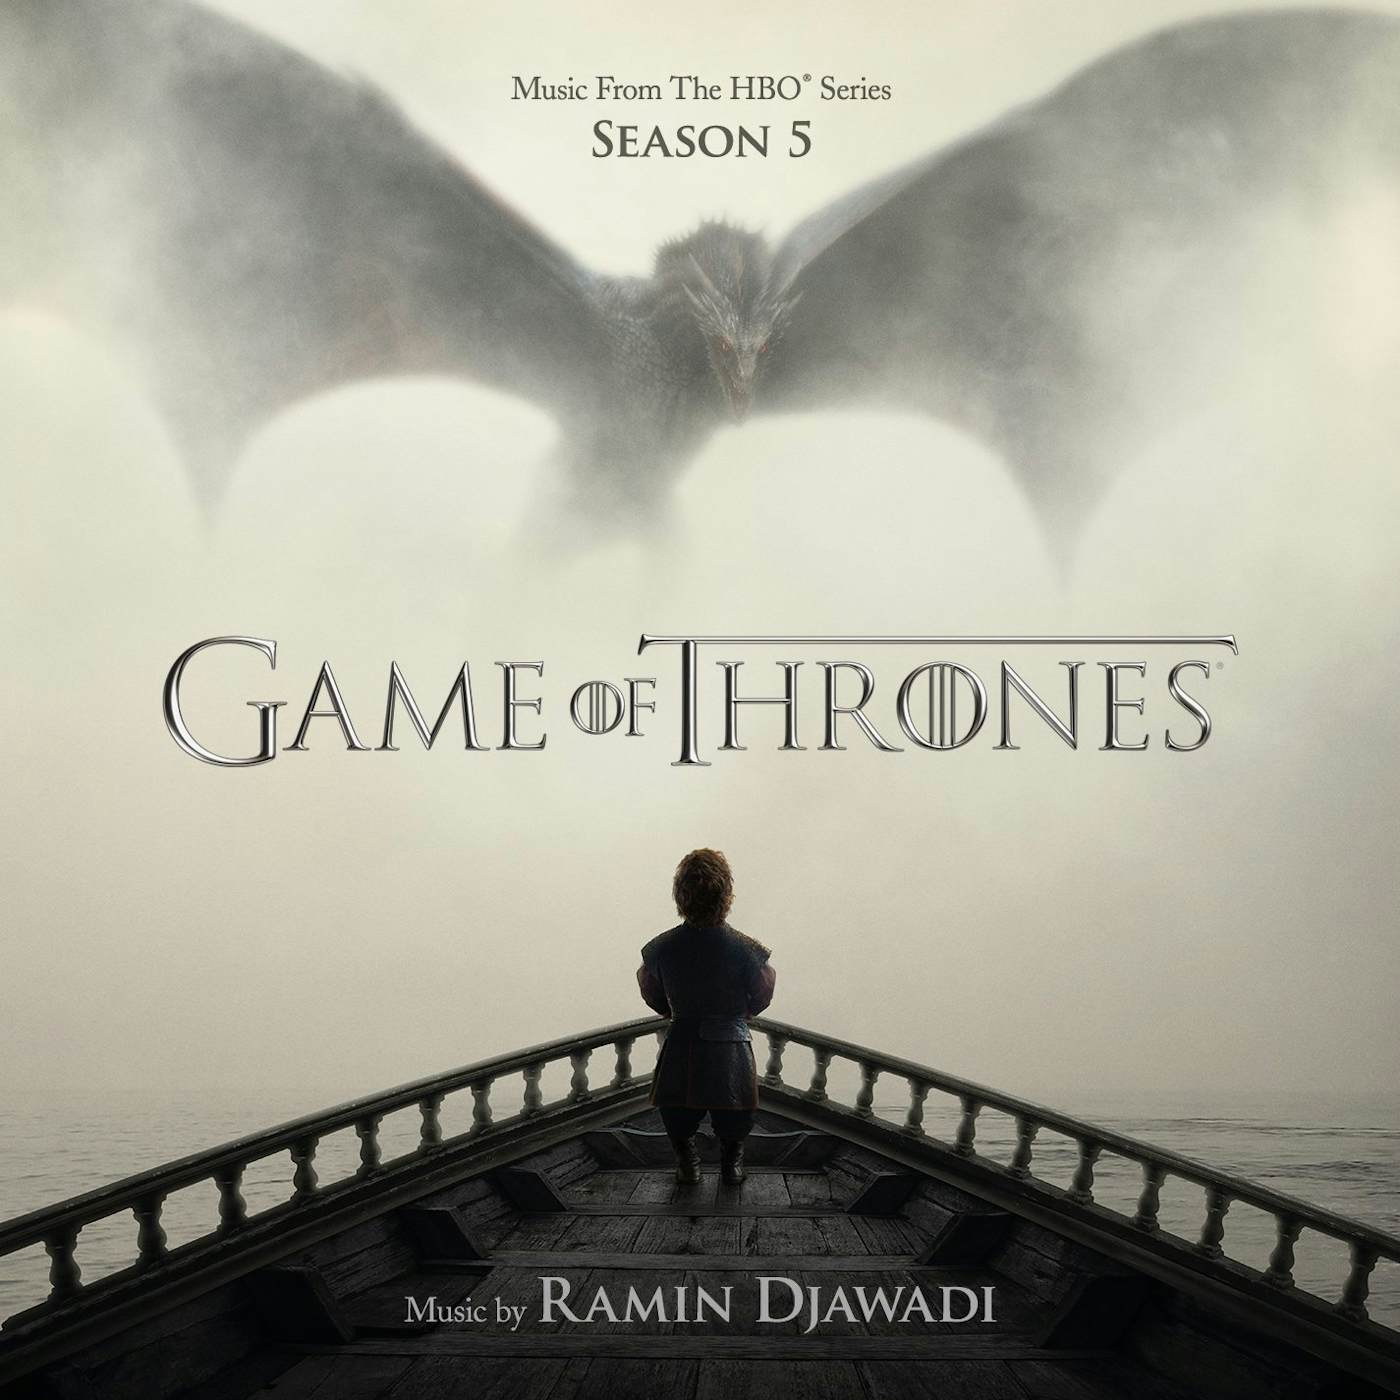 Ramin Djawadi GAME OF THRONES SEASON 5 - TV Original Soundtrack CD